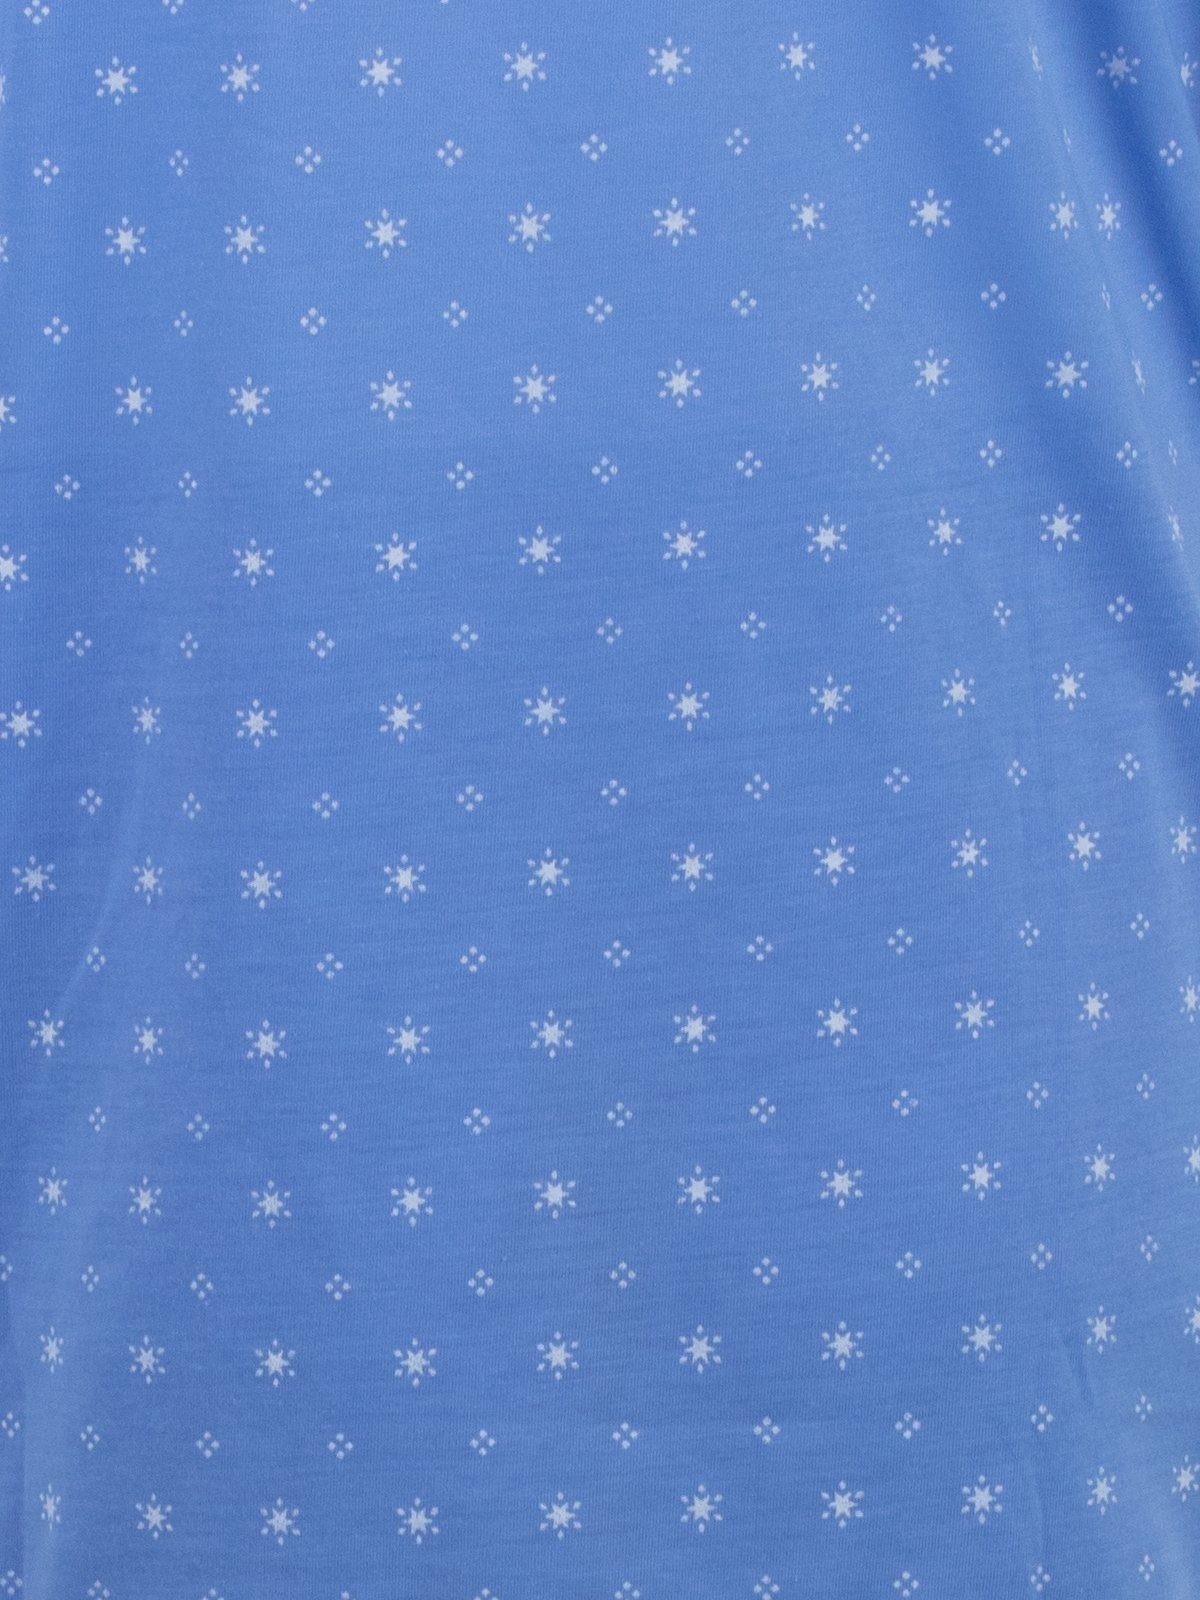 Pyjama Shorty Schlafanzug Sonne blau Lucky Set -